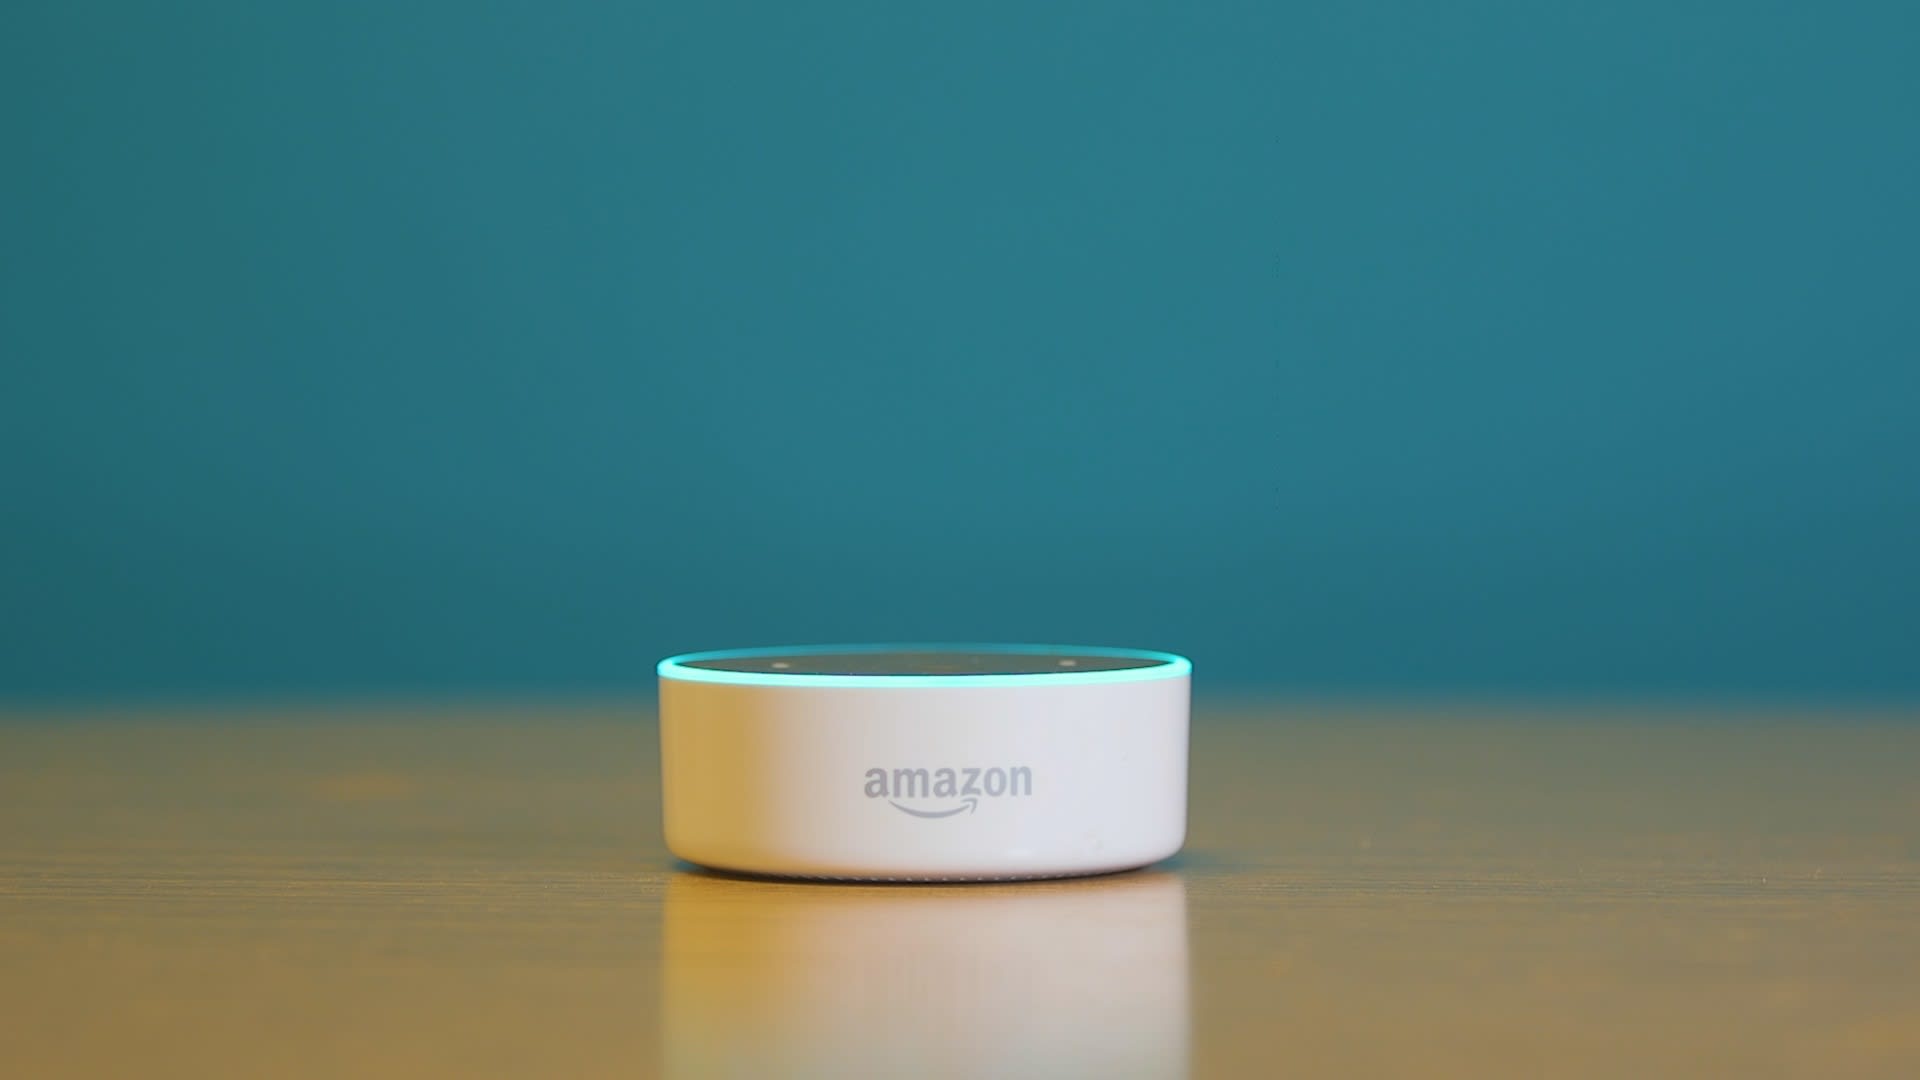 Amazon executives overseeing Alexa, hardware group depart the company